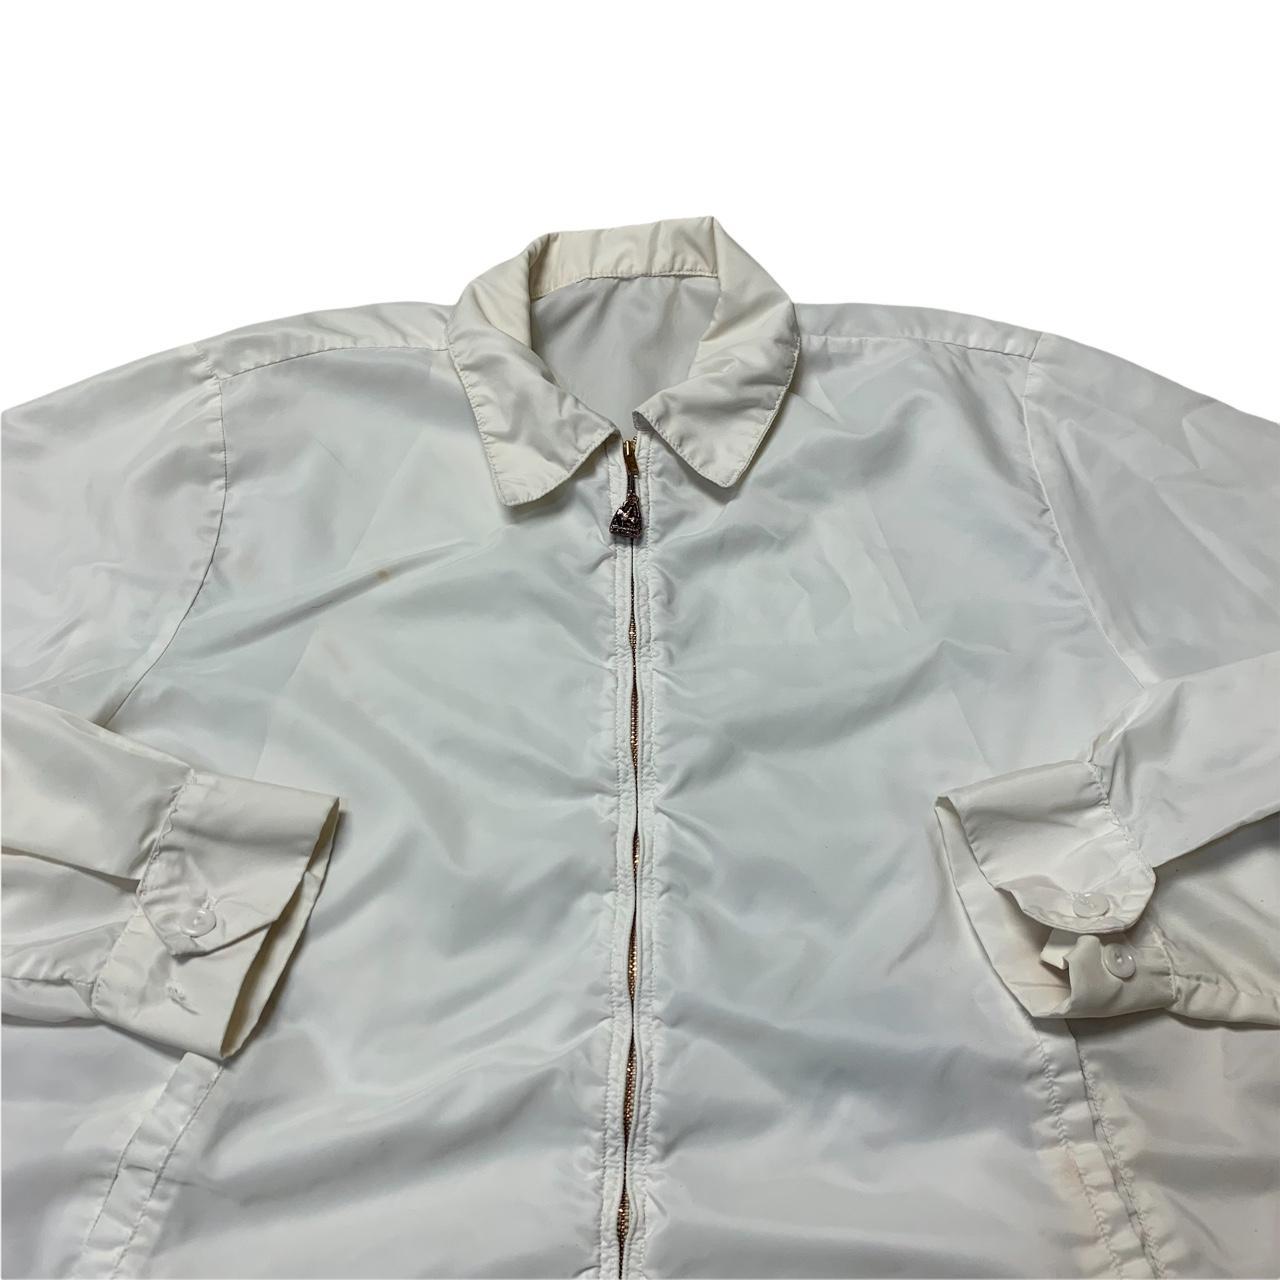 Vintage Essential 60’s Pacific Trail Jacket fits... - Depop